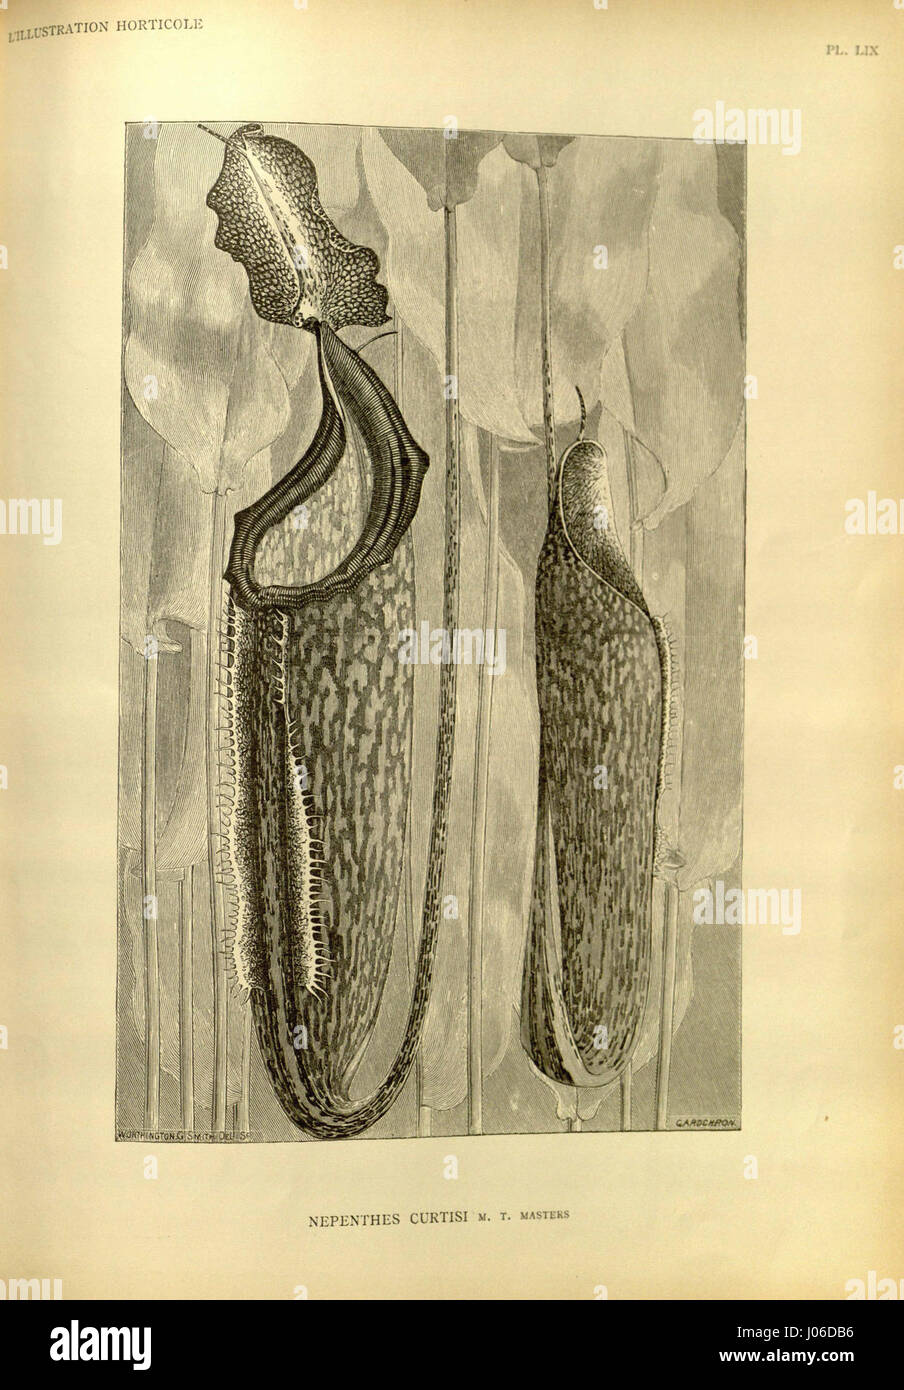 Nepenthes curtisii - LE Illustrazione28099horticole (1888) Foto Stock